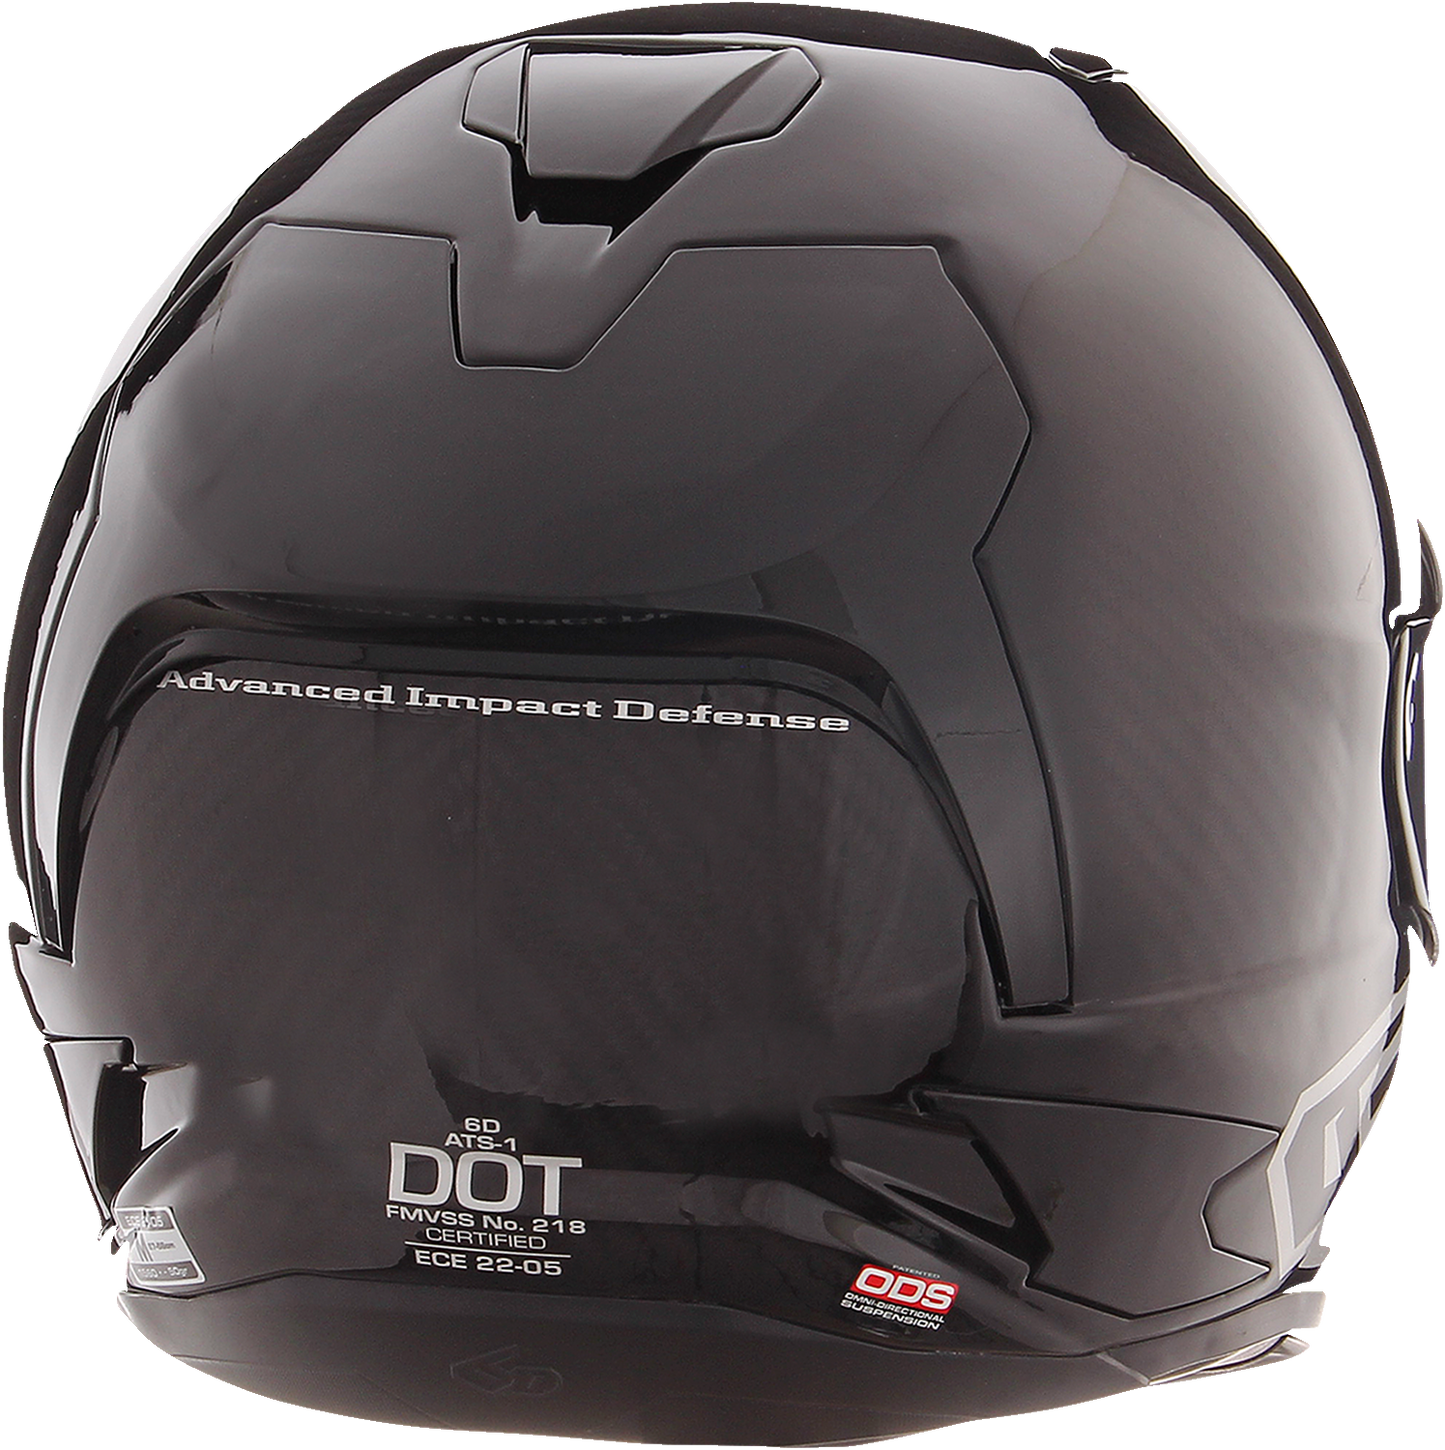 6D ATS-1R Helmet - Gloss Black - Small 30-0905